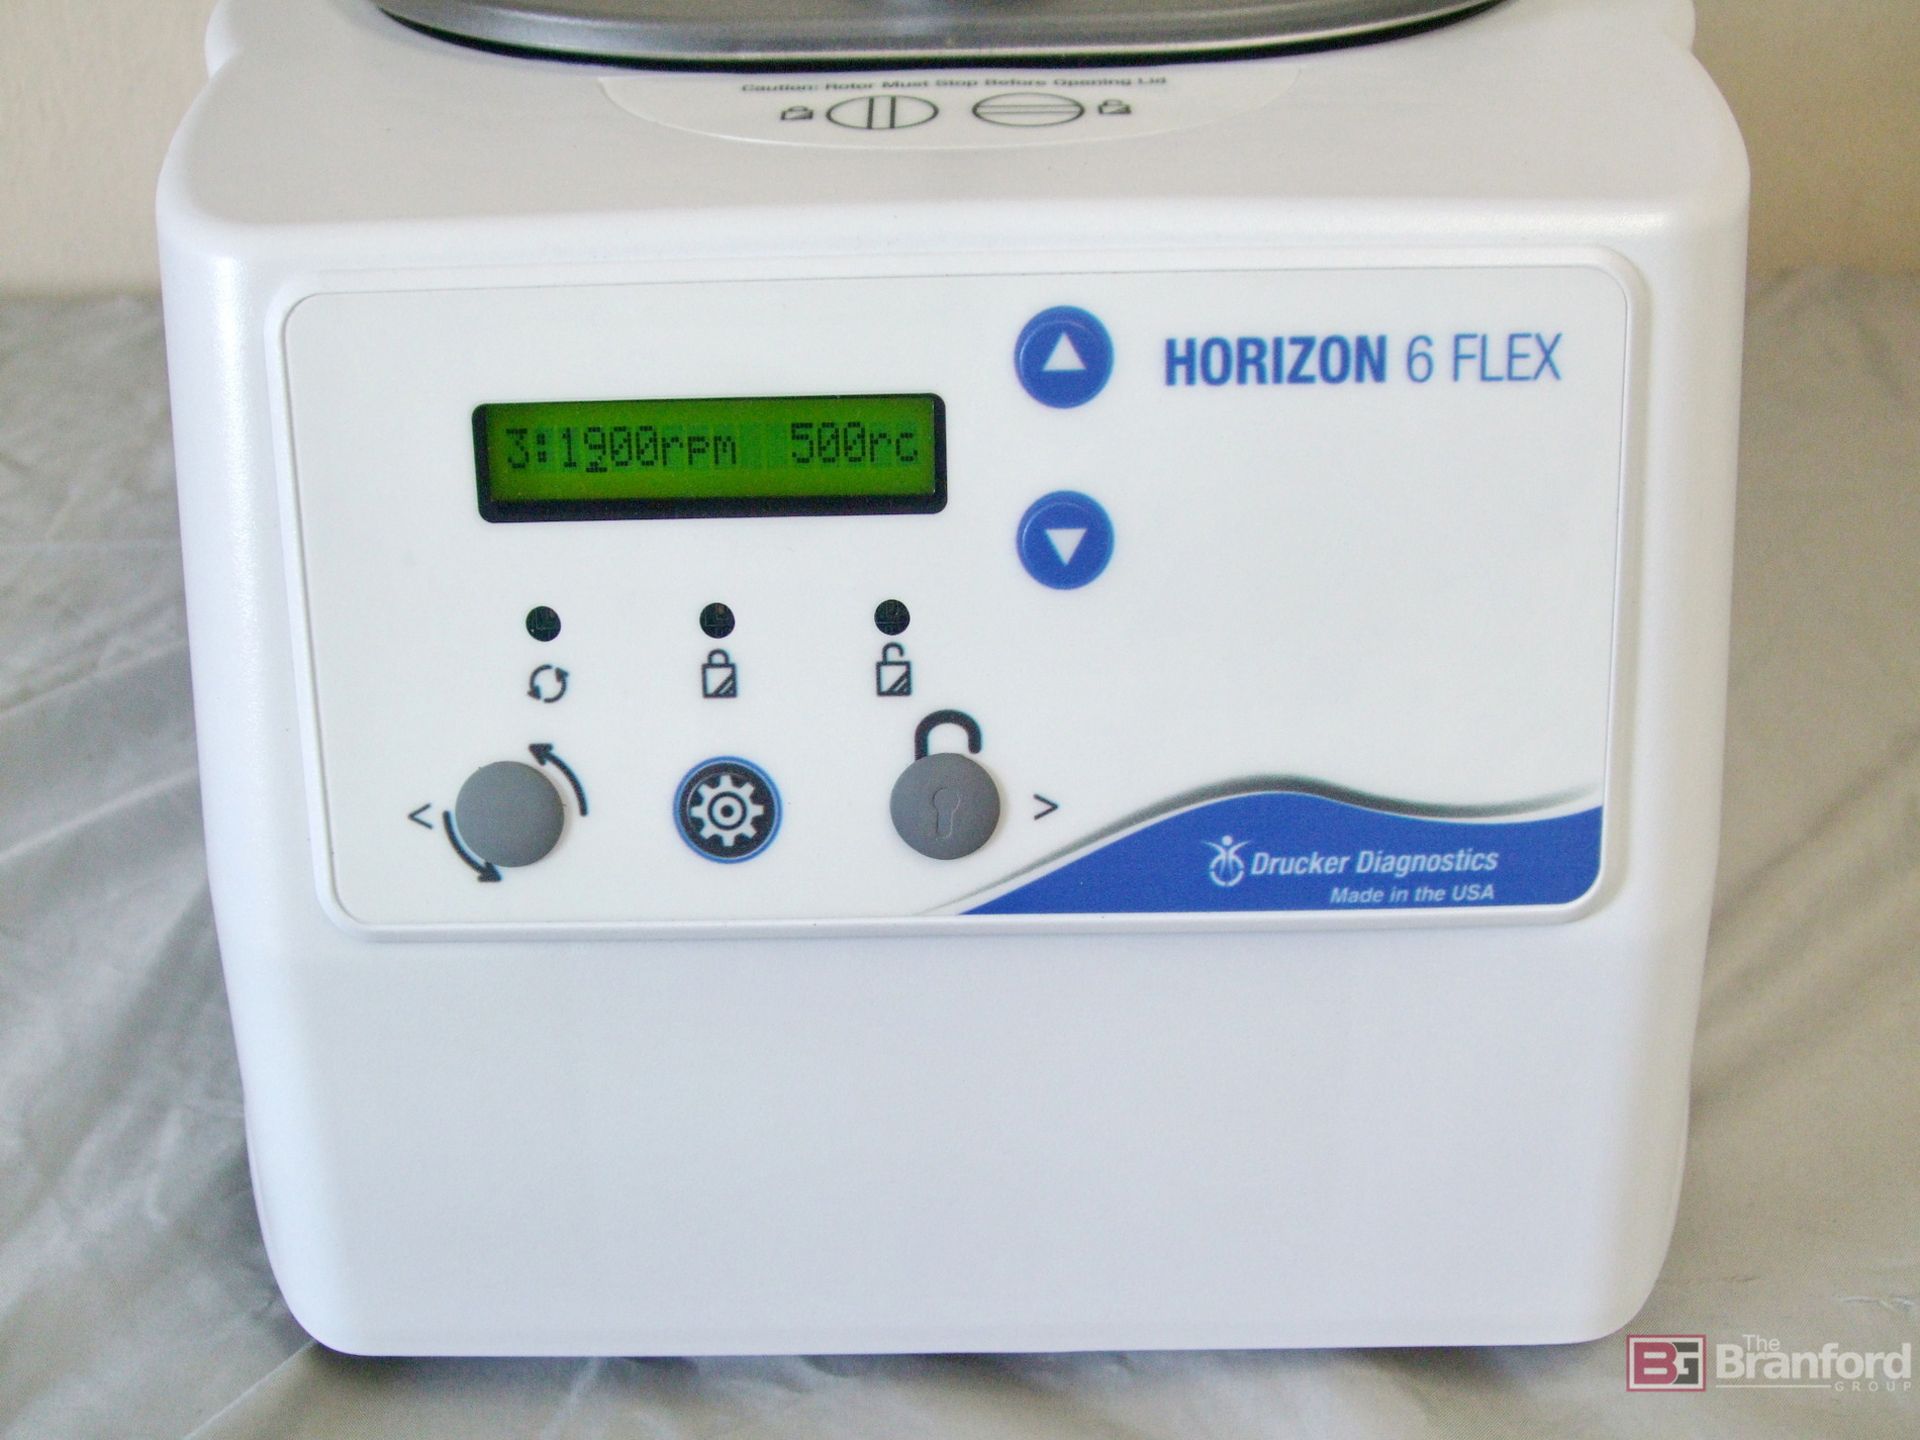 Drucker Diagnostics Horizon 6 Flex Centrifuge - USED